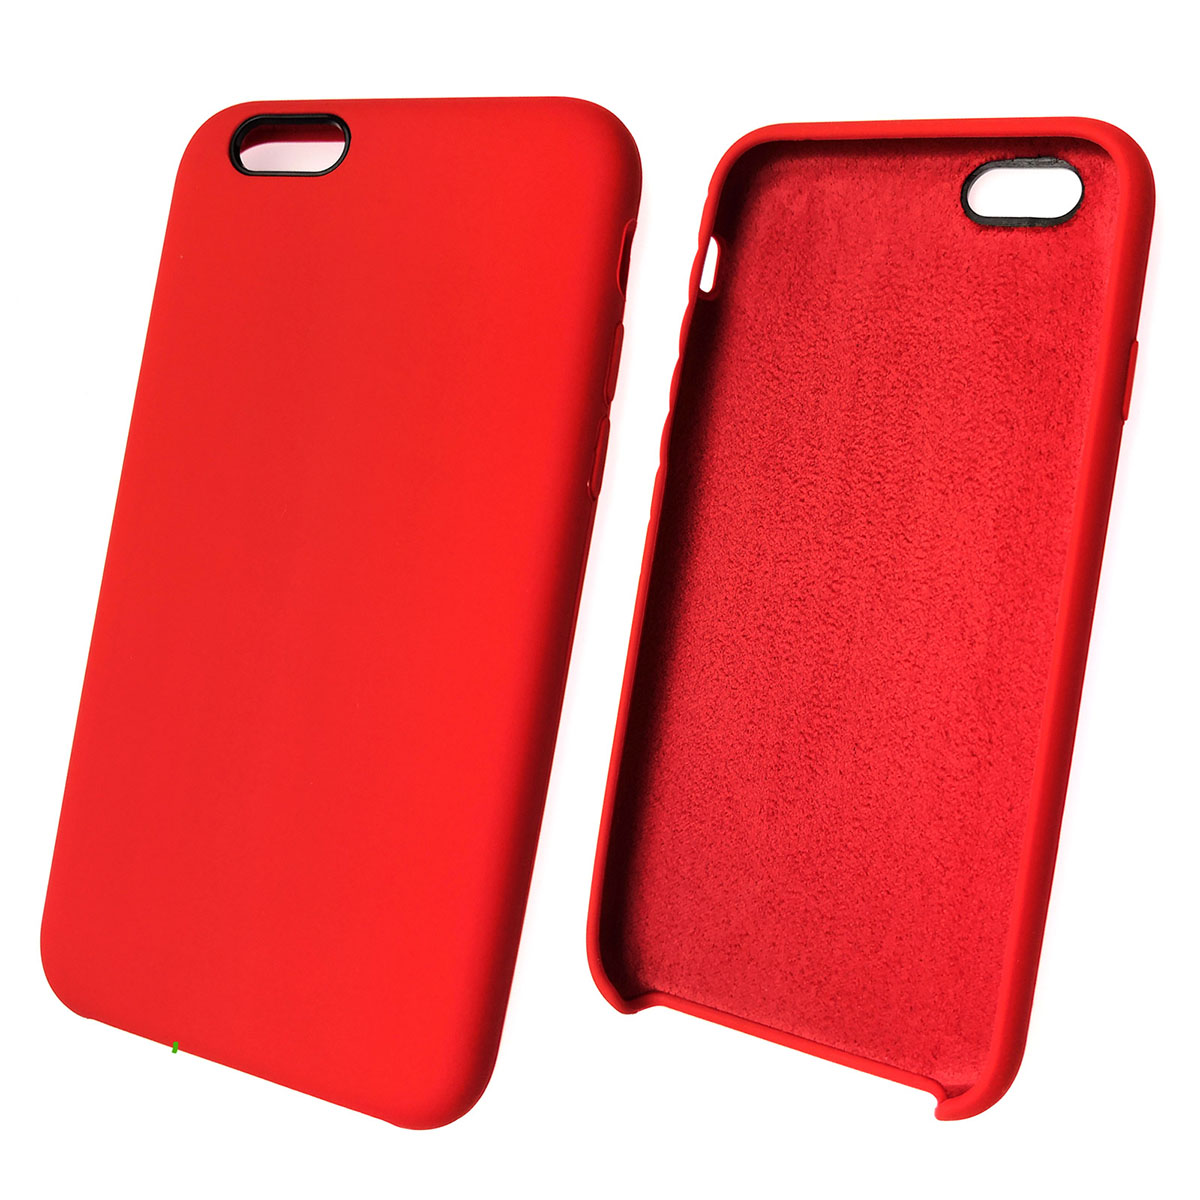 Чехол накладка Silicon Case для APPLE iPhone 6, 6G, 6S, силикон, бархат, цвет красный.